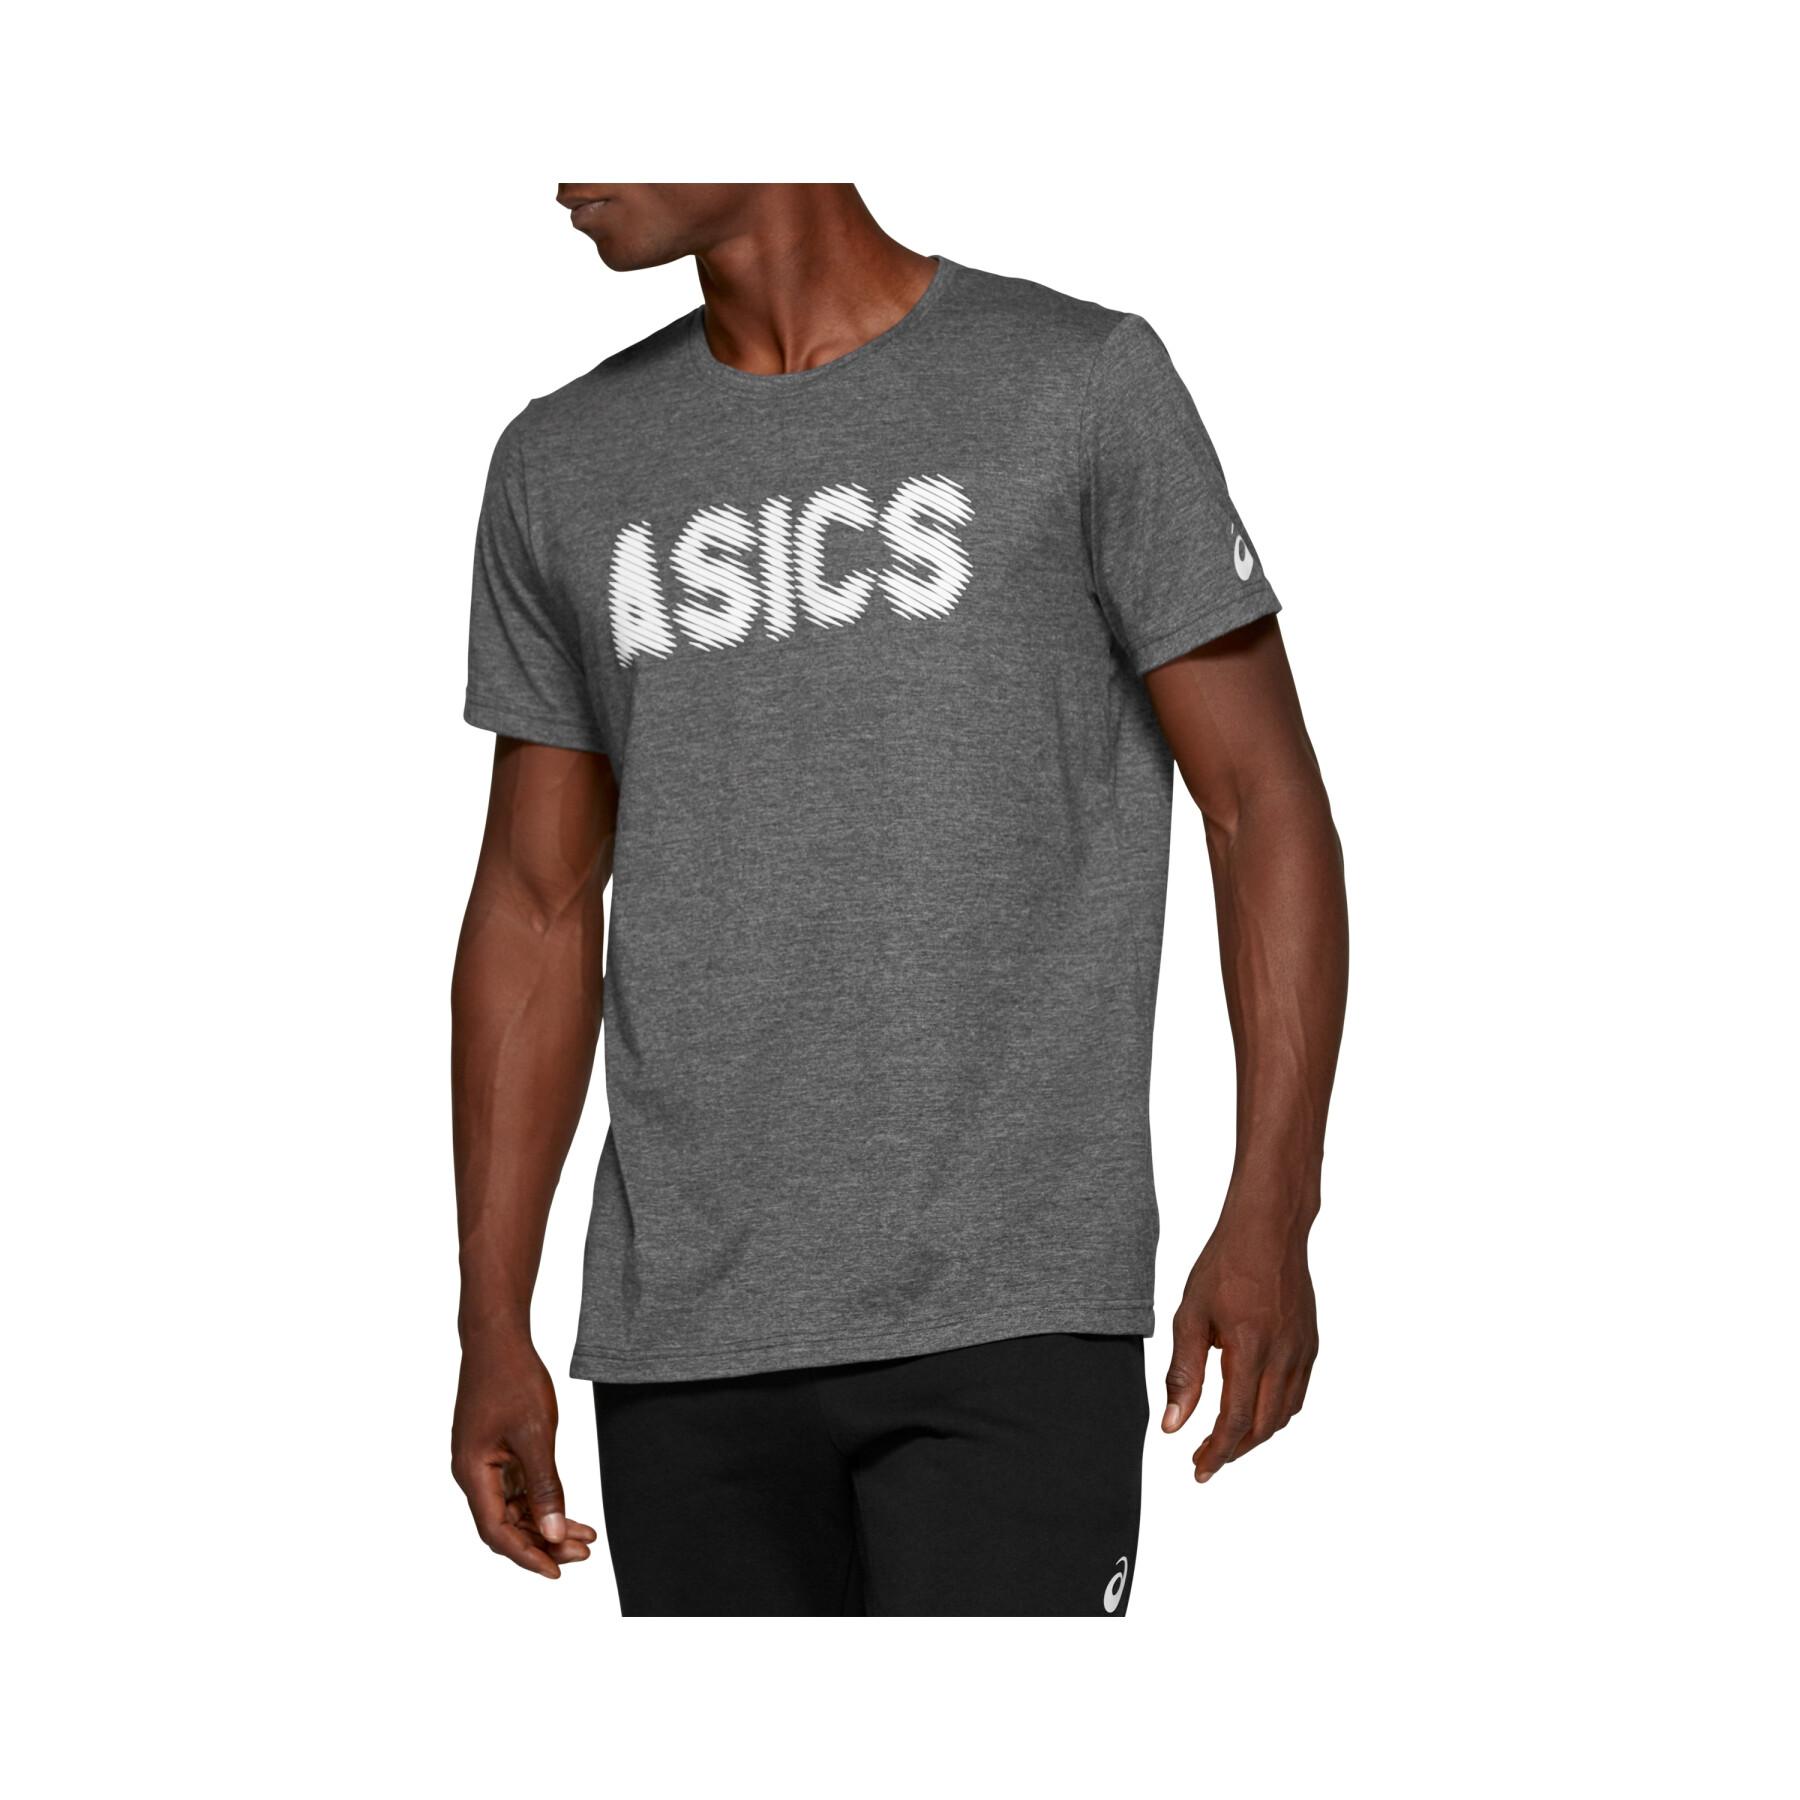 T-shirt Asics Gpx T 2